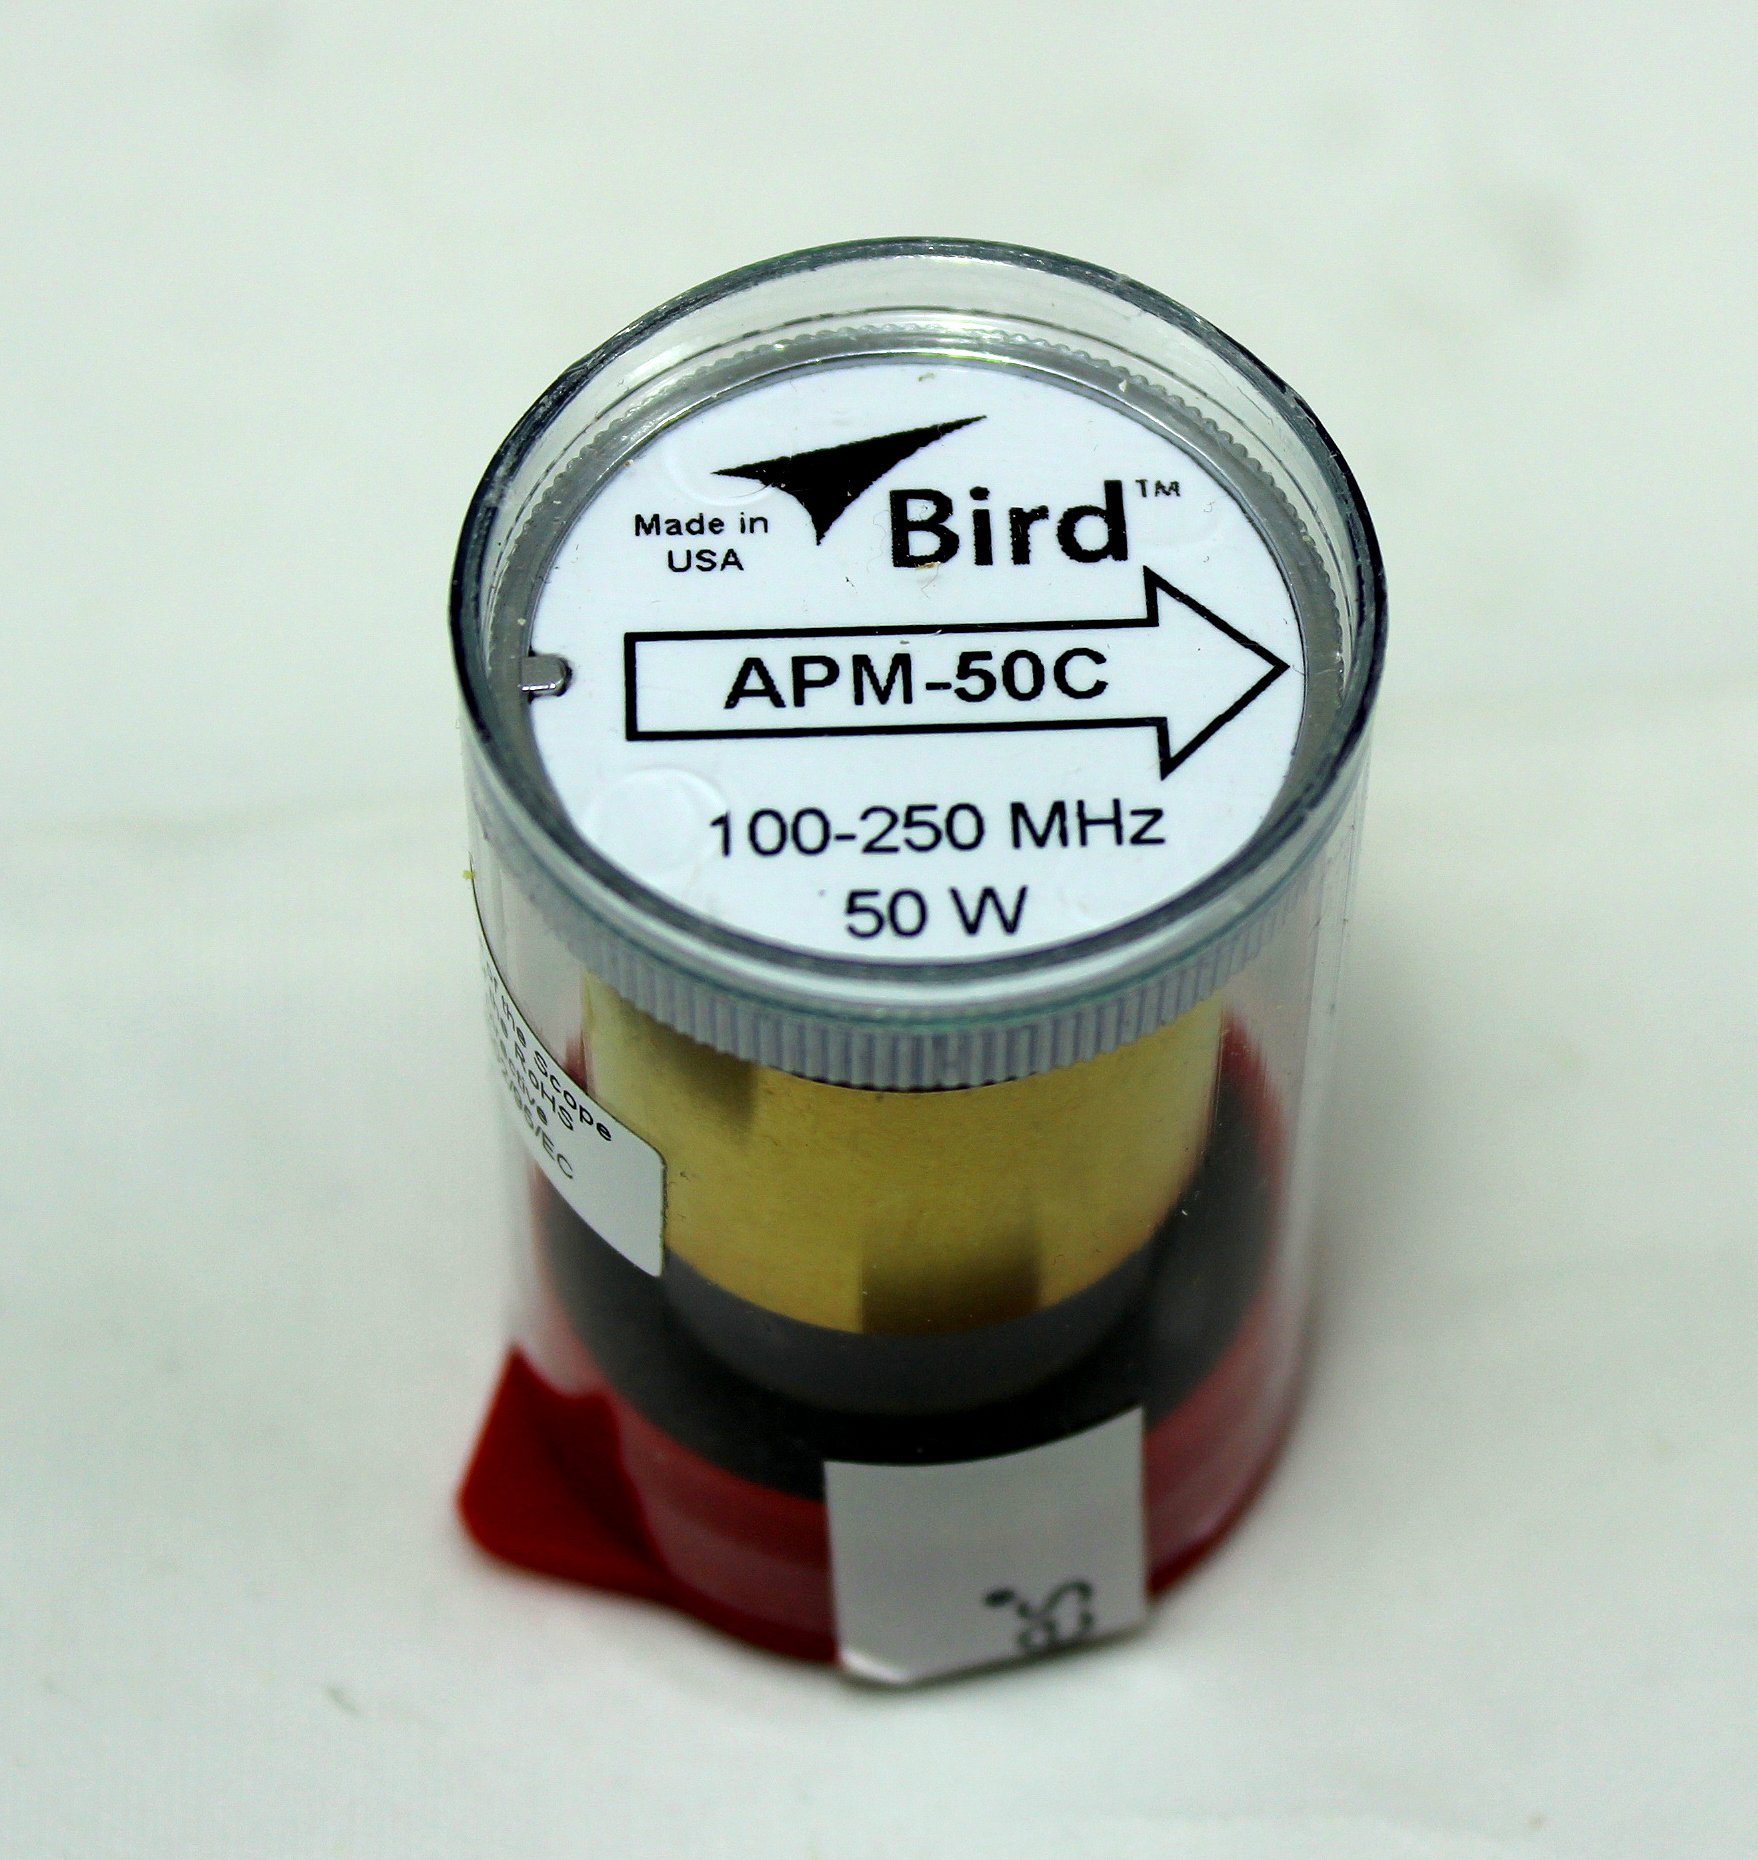 Bird DPM-50C Element 1.25W-50W 100-250 MHz